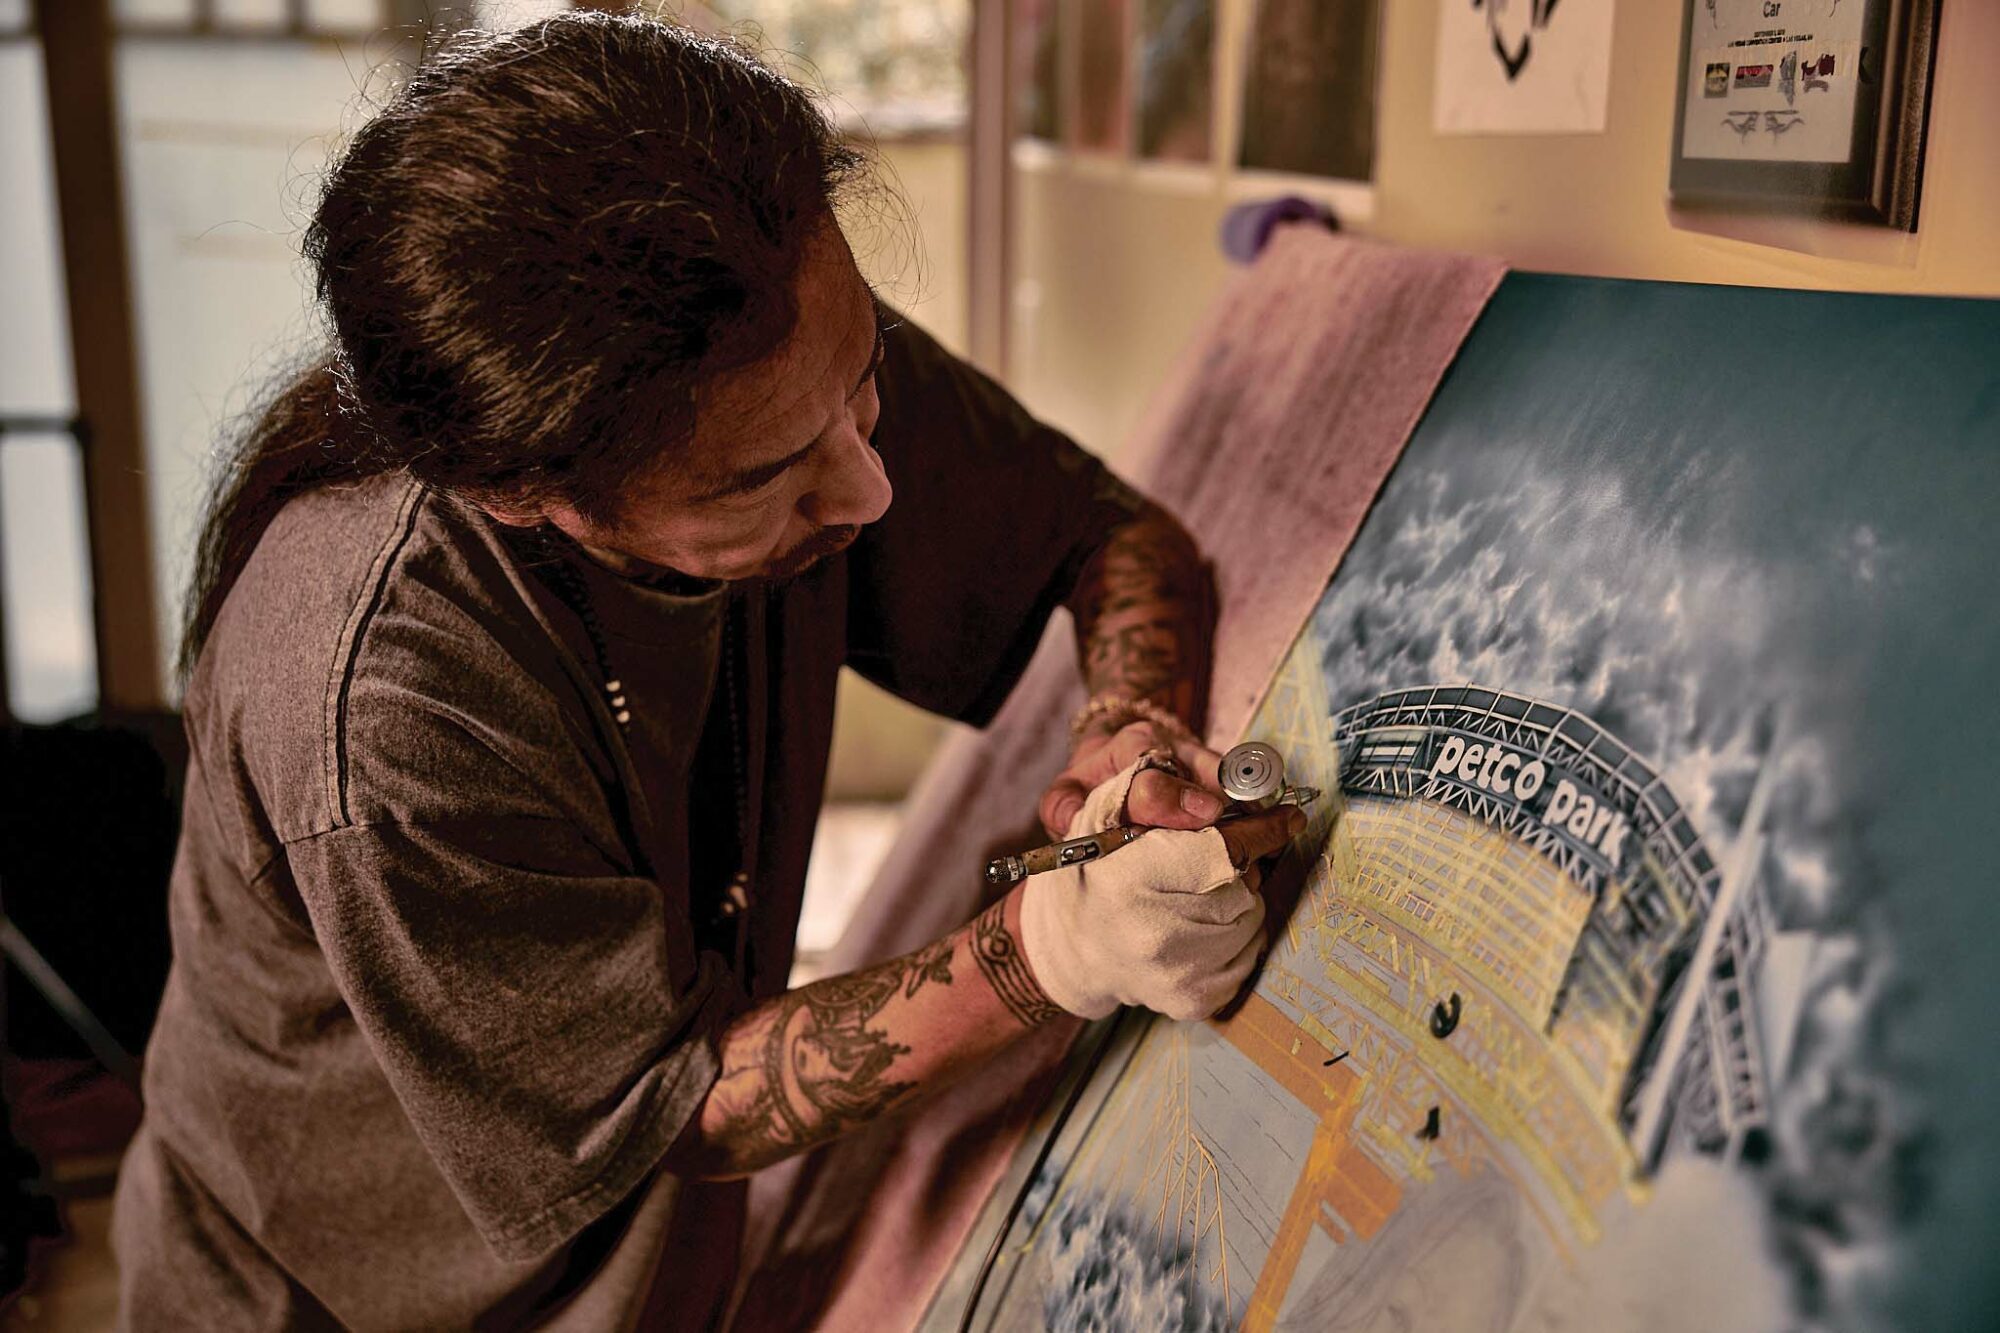 Masonic lowrider artist Shinji Hara of Anaheim no. 207 works on a new airbrush piece in his home.